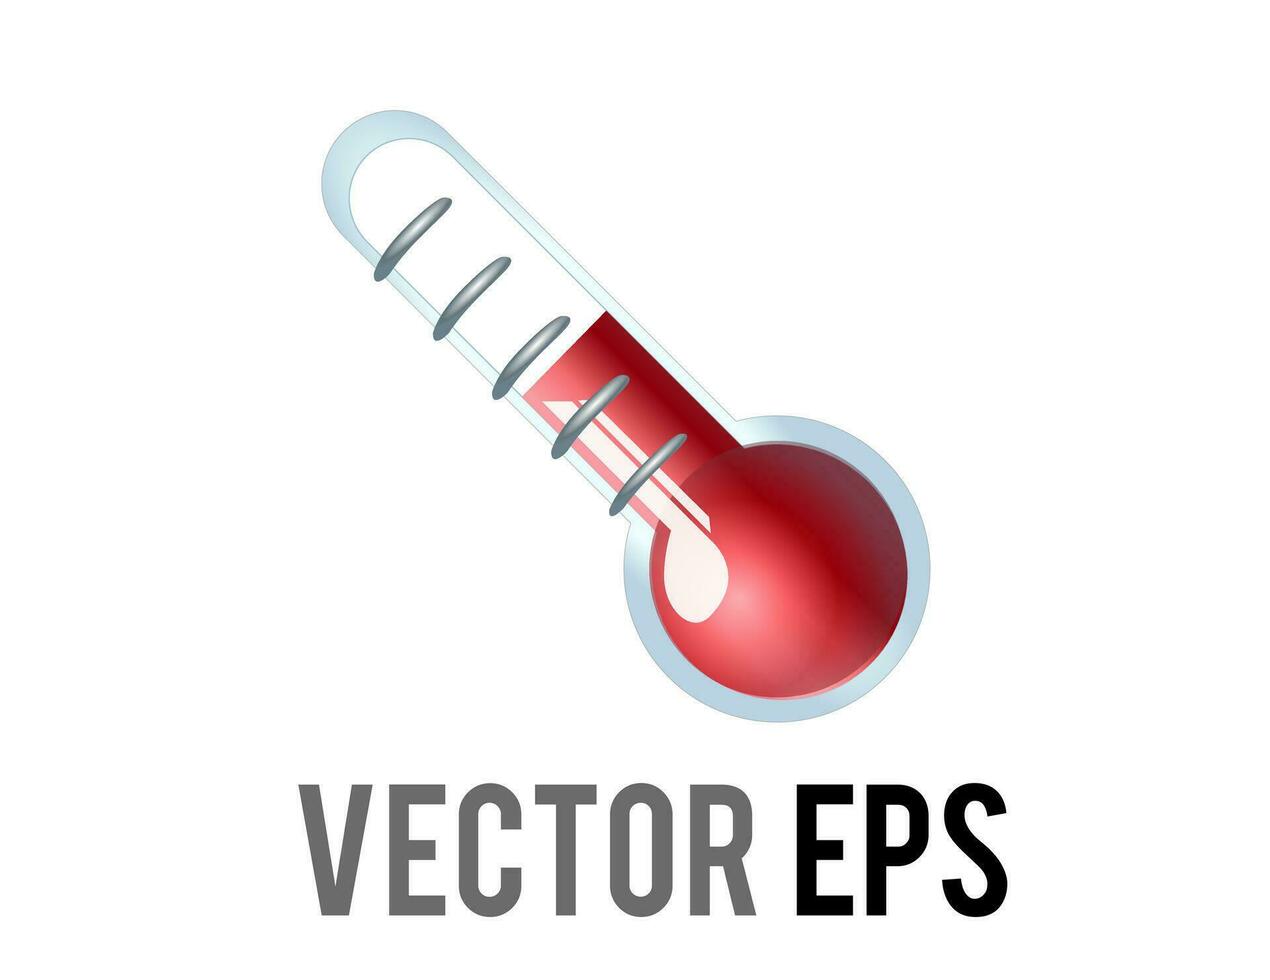 Vector liquid in glass thermometer icon with red liquid risen to measure temperature